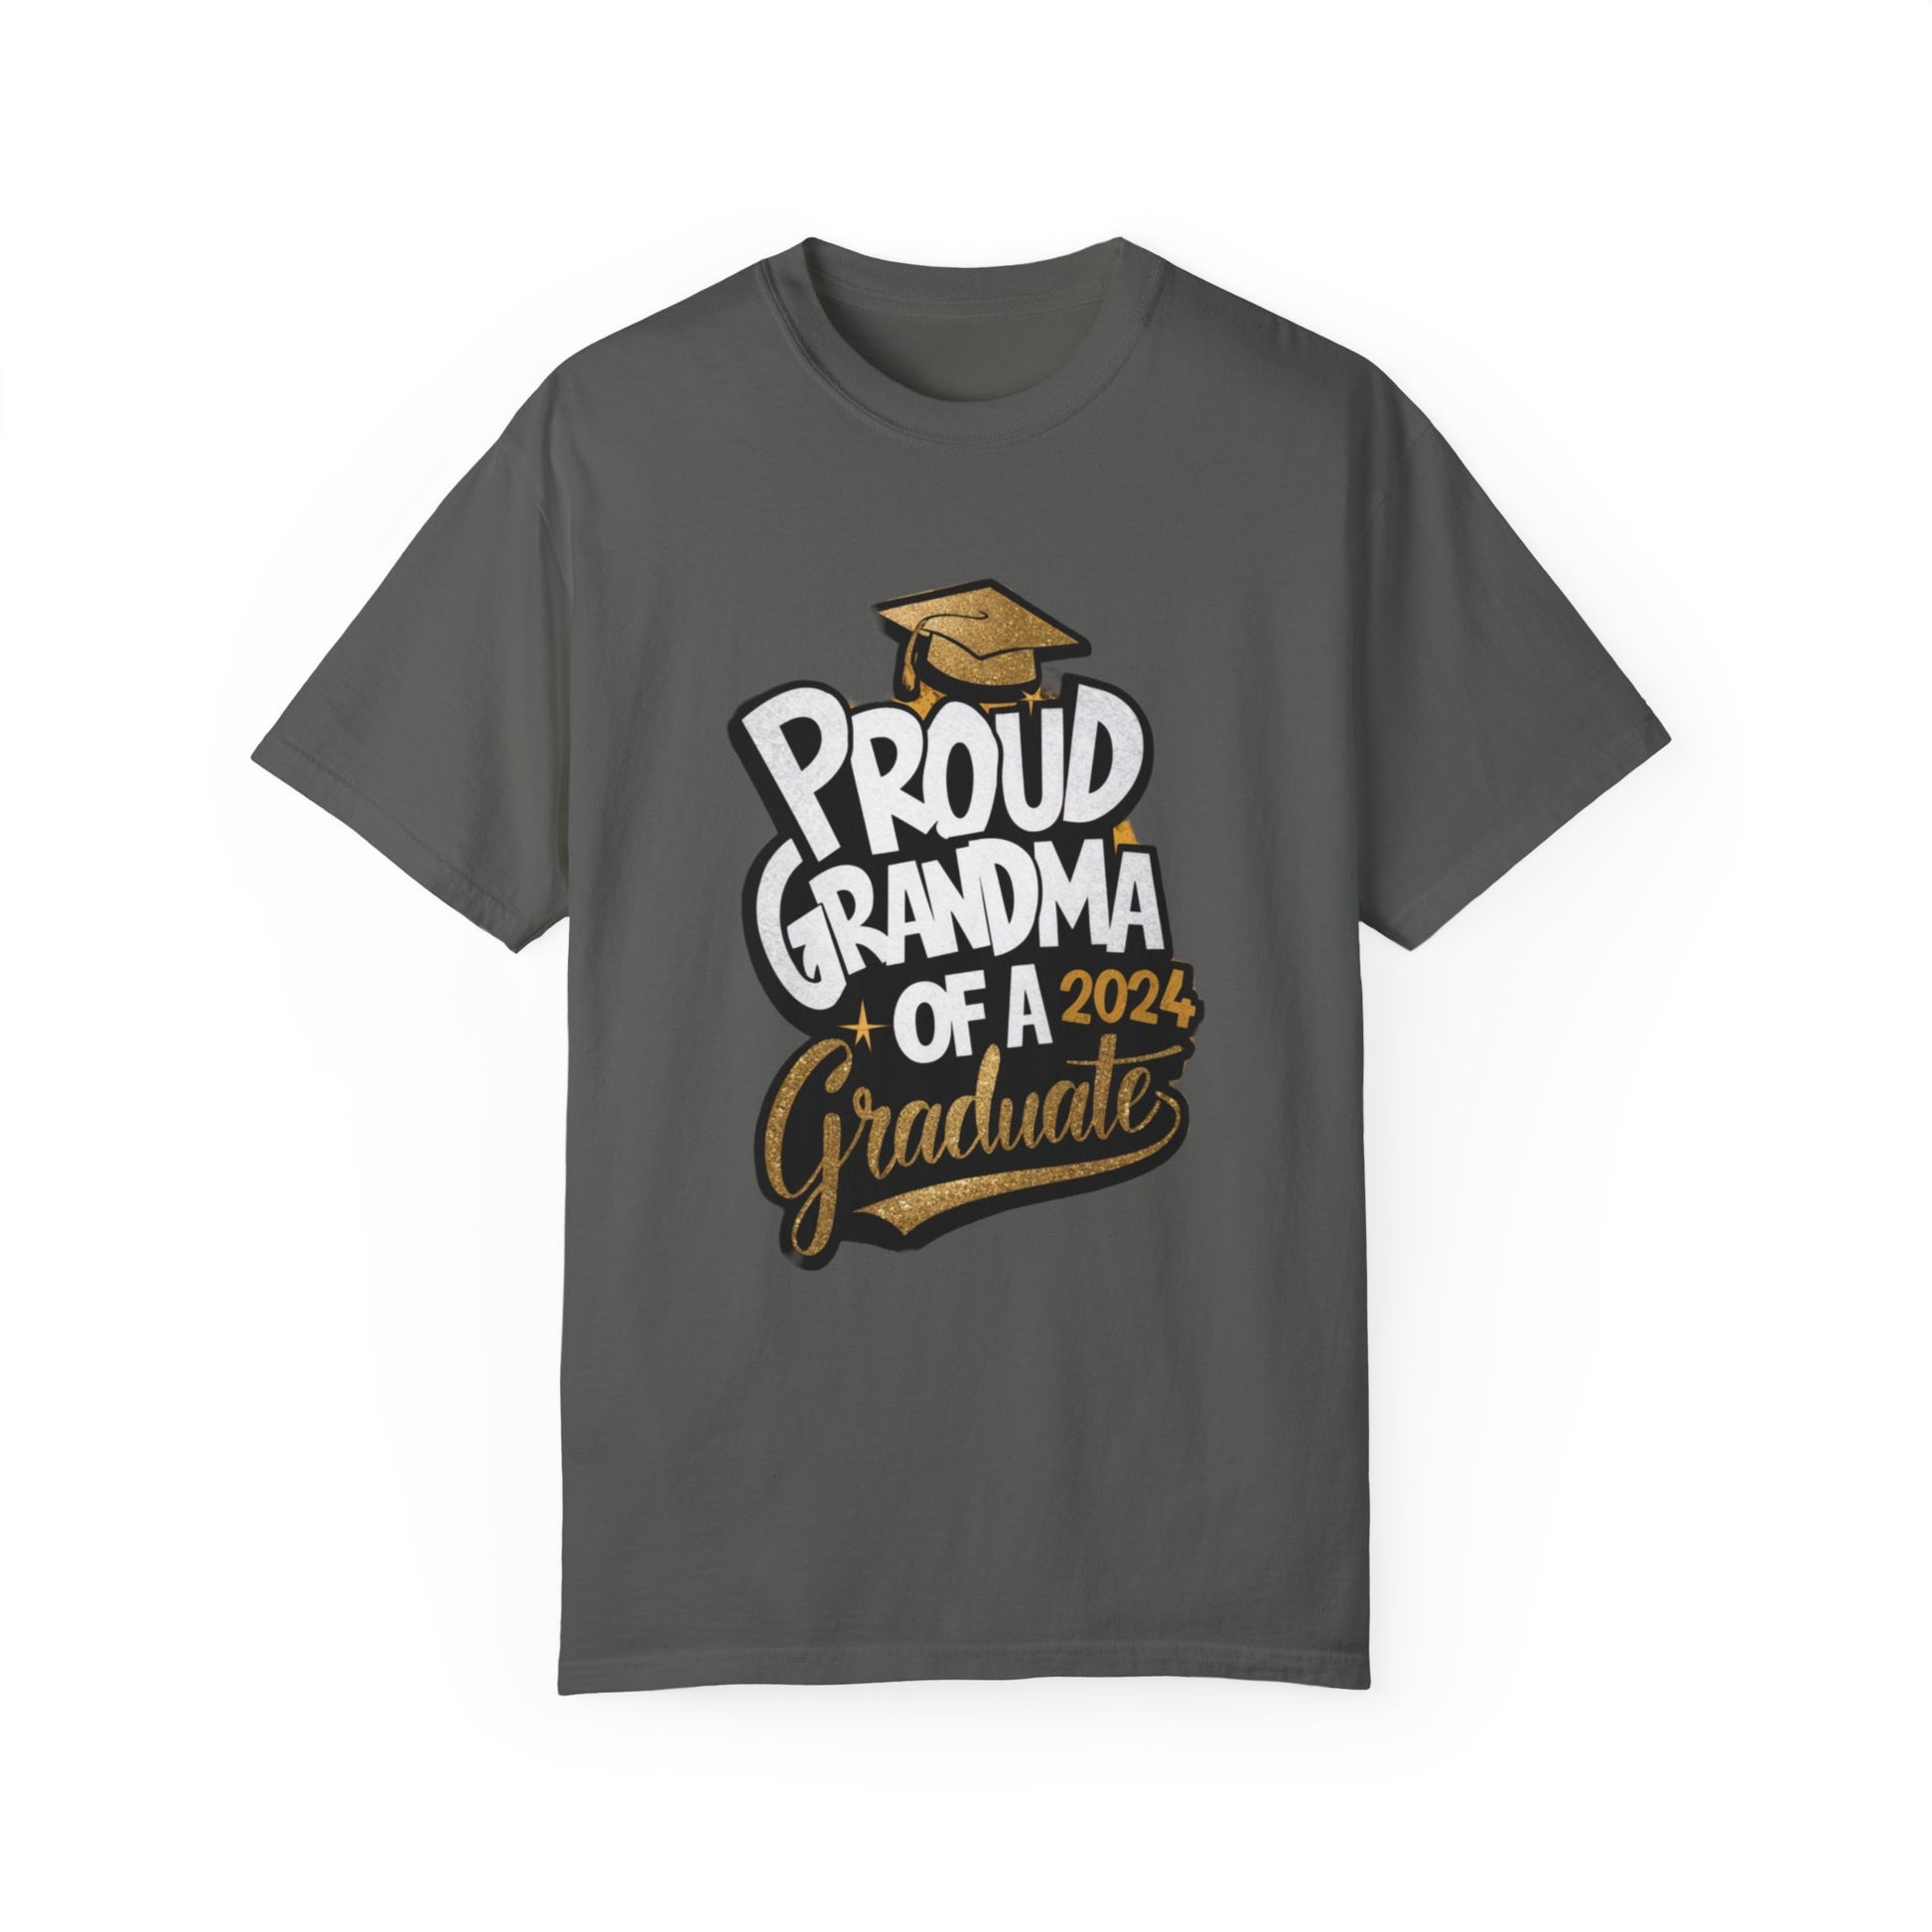 Proud of Grandma 2024 Graduate Unisex Garment-dyed T-shirt Cotton Funny Humorous Graphic Soft Premium Unisex Men Women Pepper T-shirt Birthday Gift-12